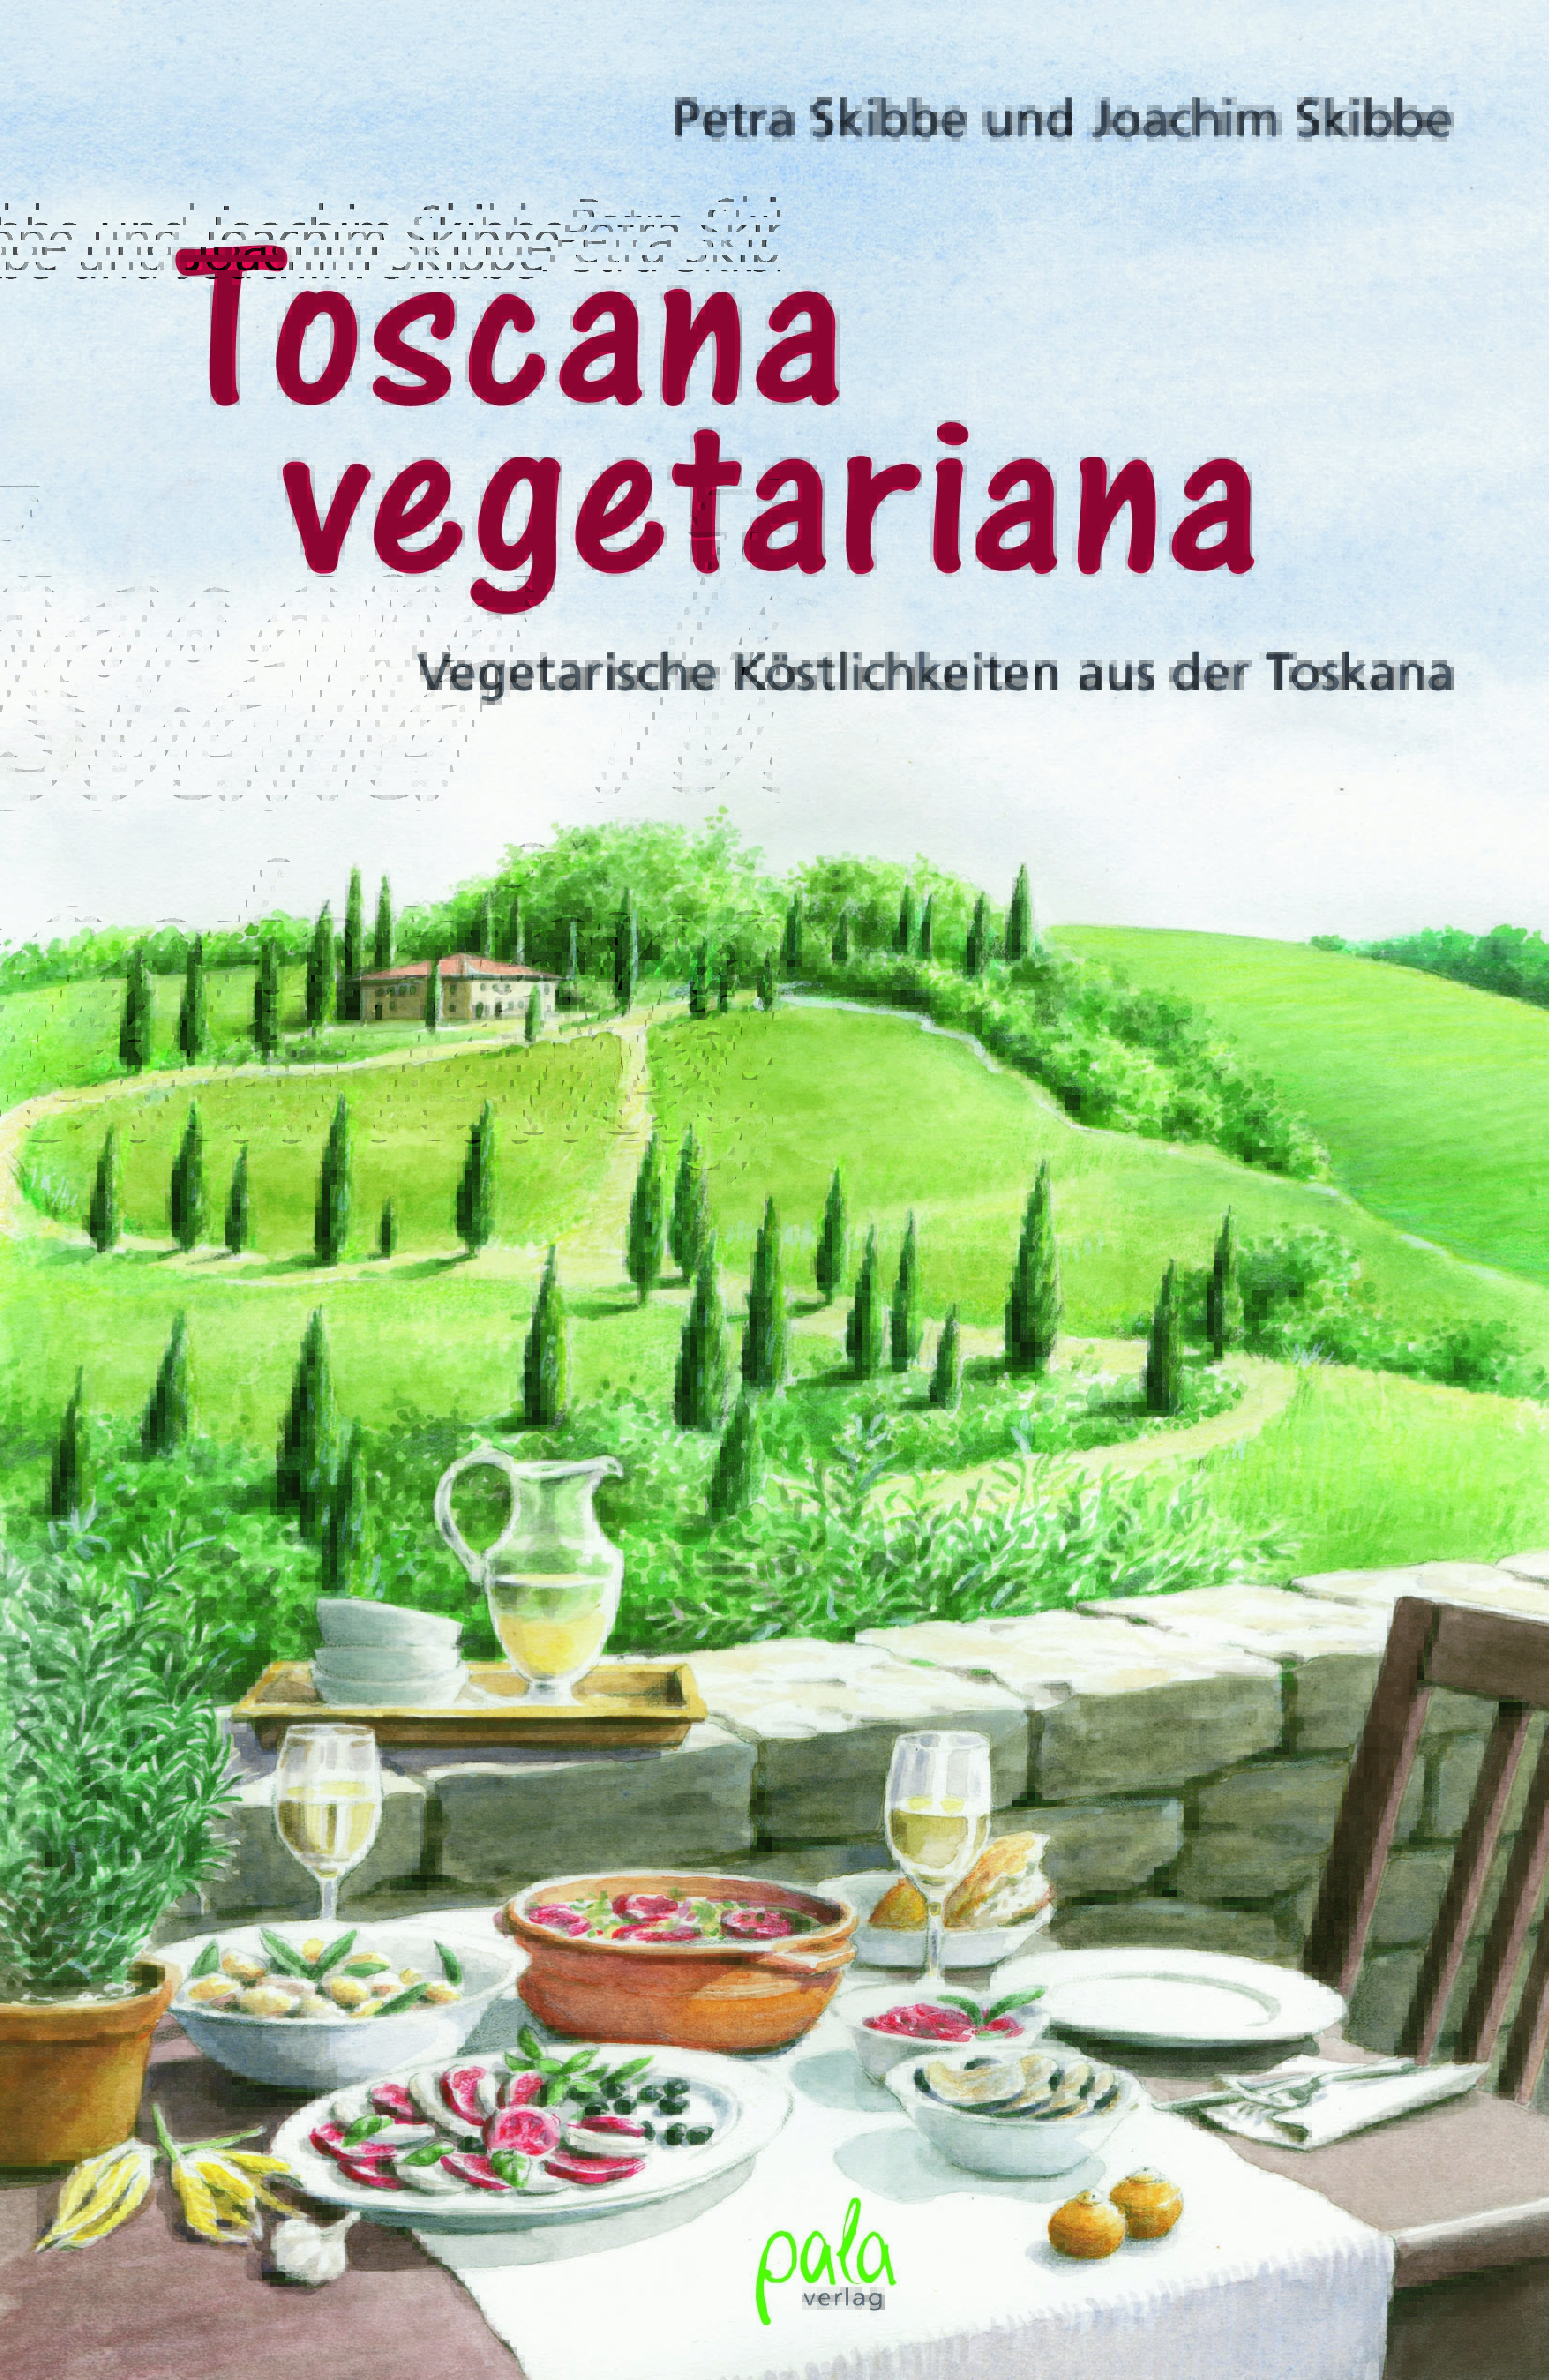 Toscana vegetariana, Skibbe